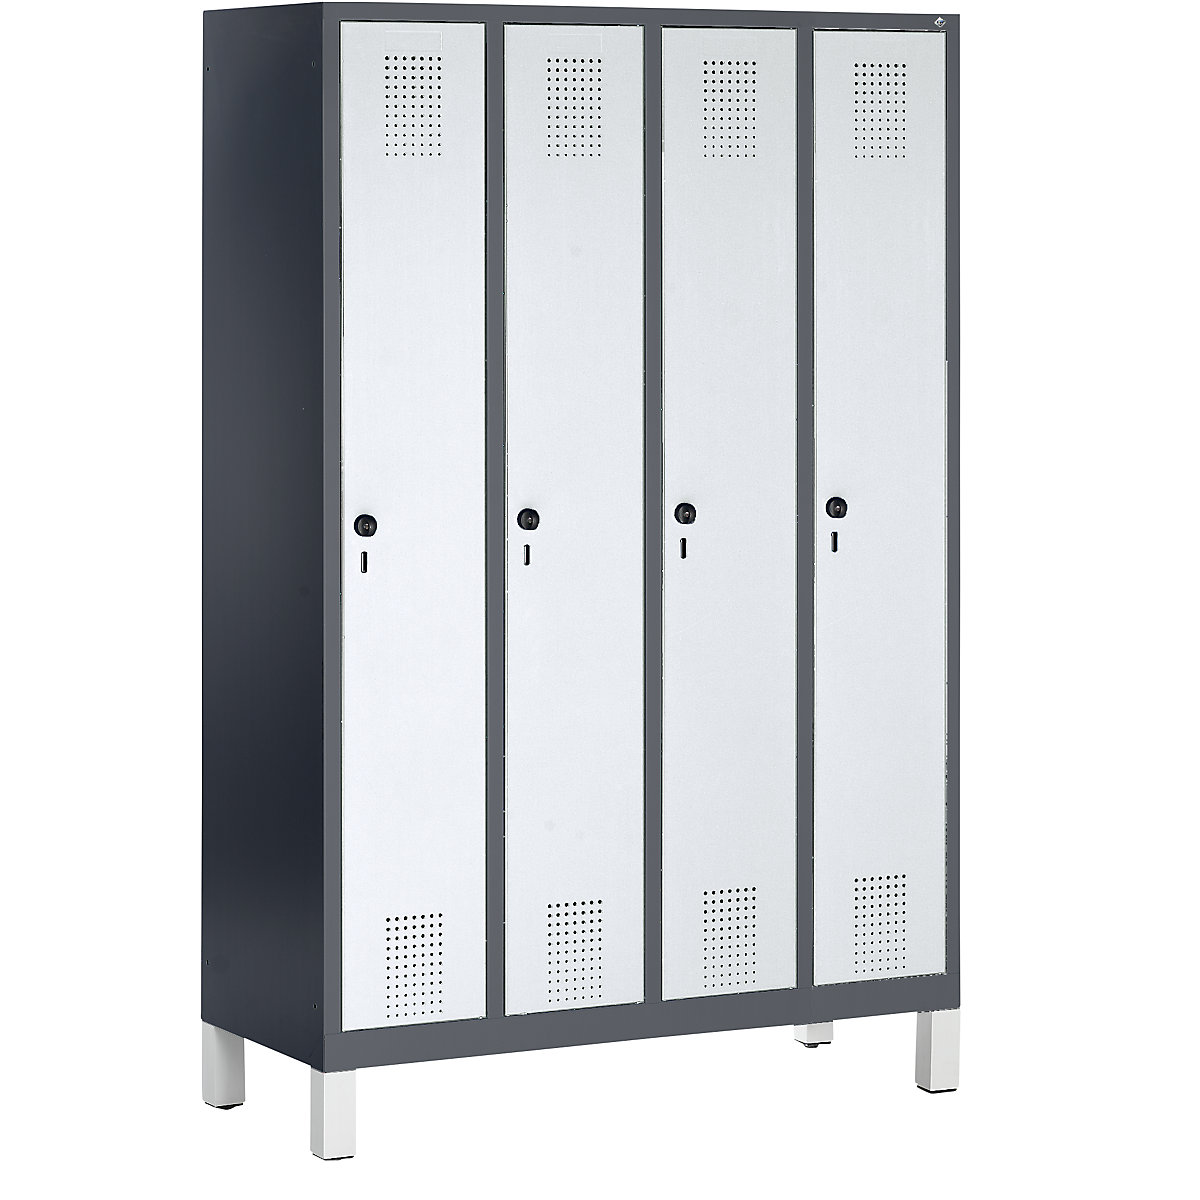 EVOLO cloakroom locker – C+P, with plastic feet, 4 compartments, compartment width 300 mm, black grey / white aluminium